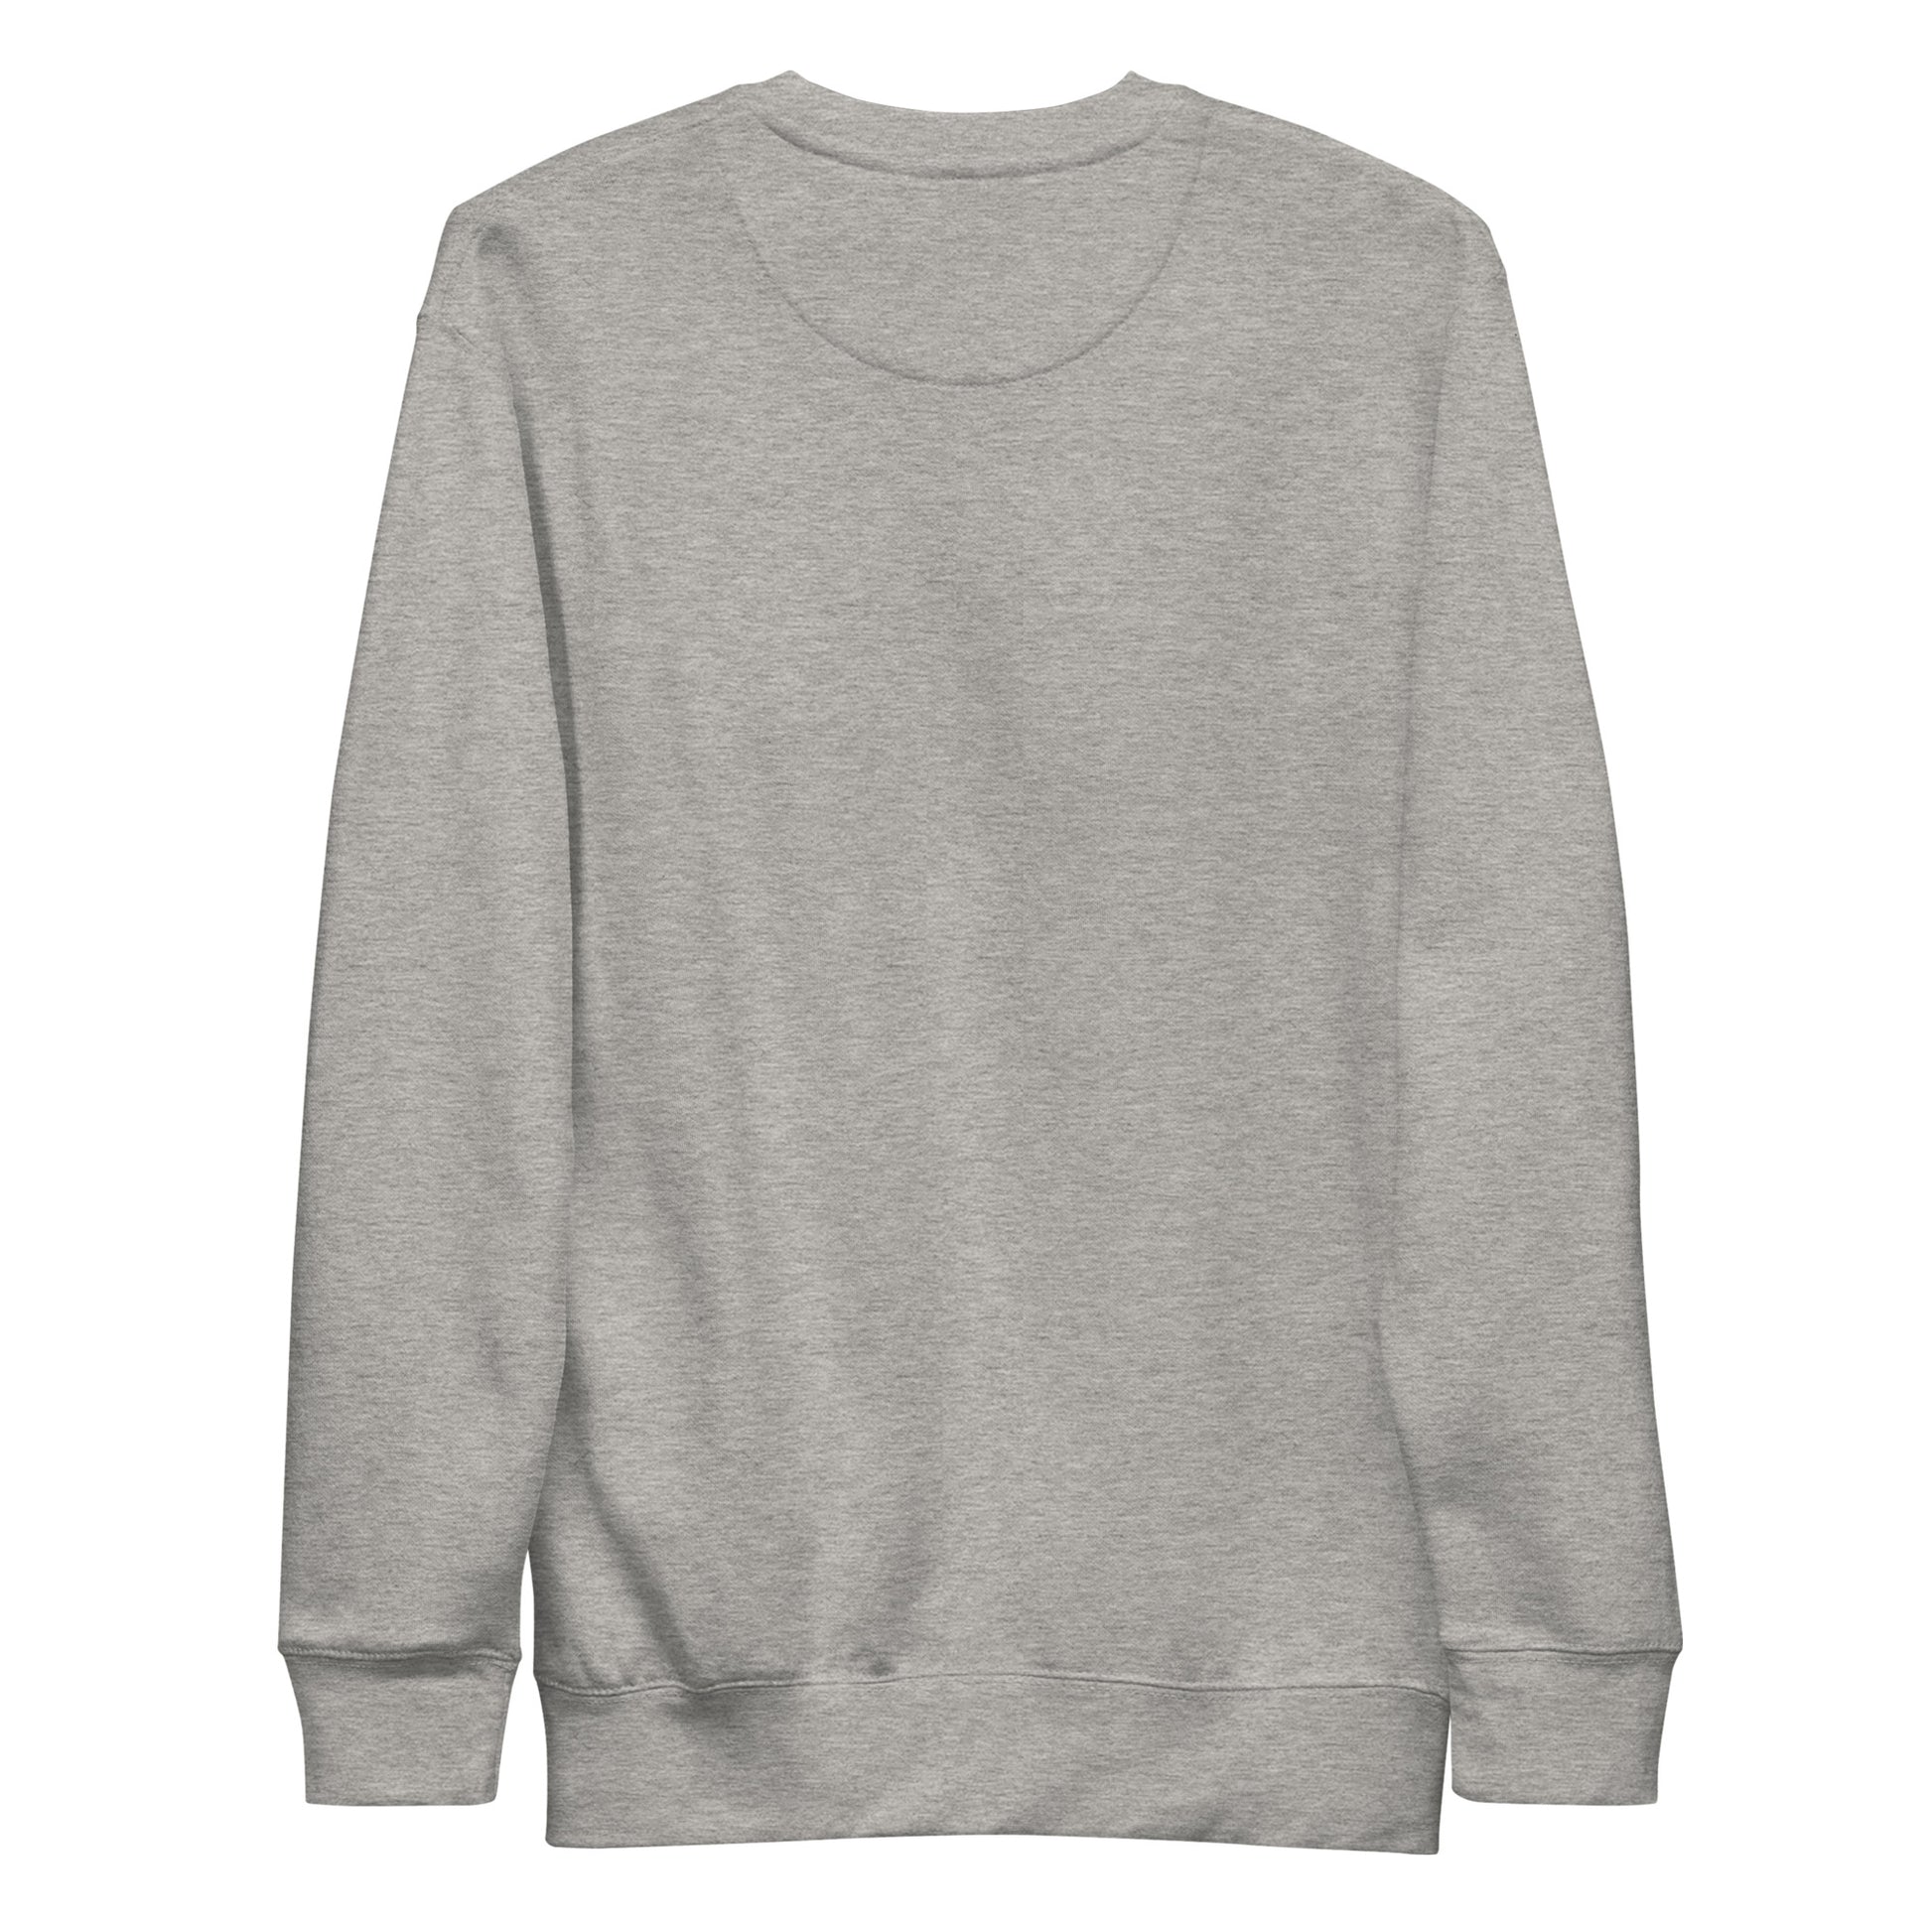 Carbon Grey Women's Premium Cotton Sweatshirt by Women's Premium Cotton Sweatshirt sold by Jain Yoga